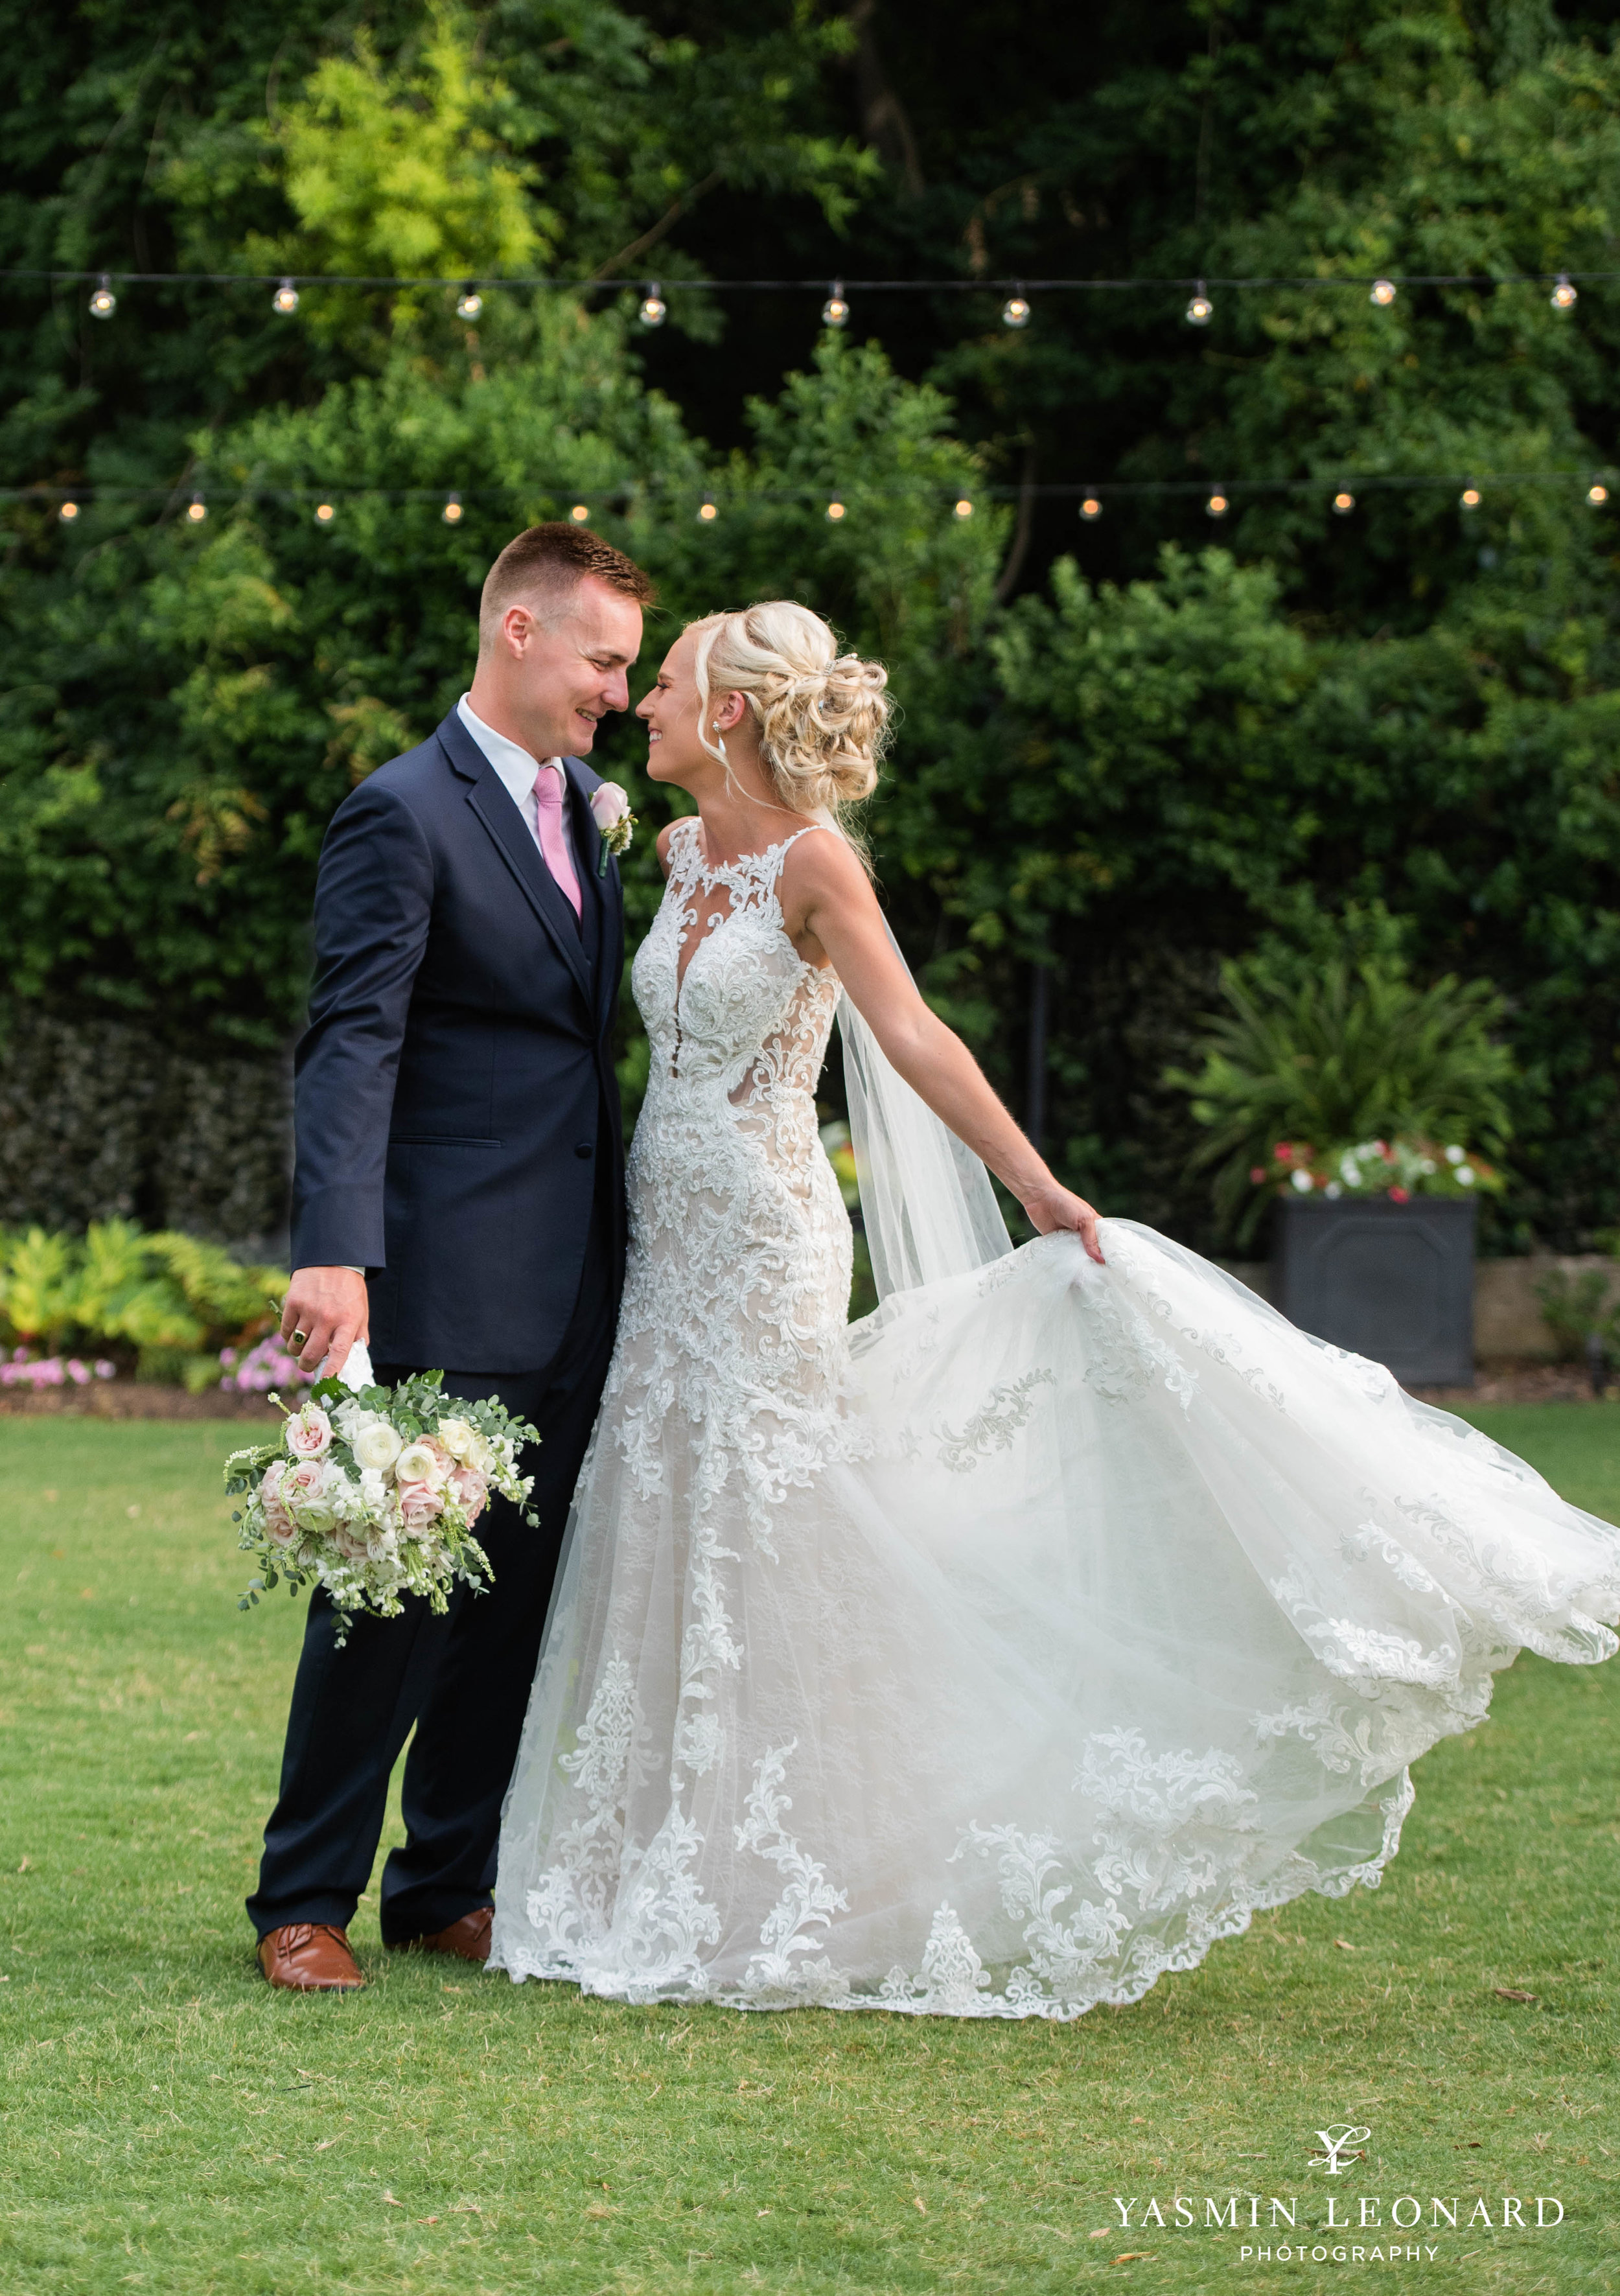 Separk Mansion - NC Weddings - Gastonia Wedding - NC Wedding Venues - Pink and Blue Wedding Ideas - Pink Bridesmaid Dresses - Yasmin Leonard Photography-28.jpg